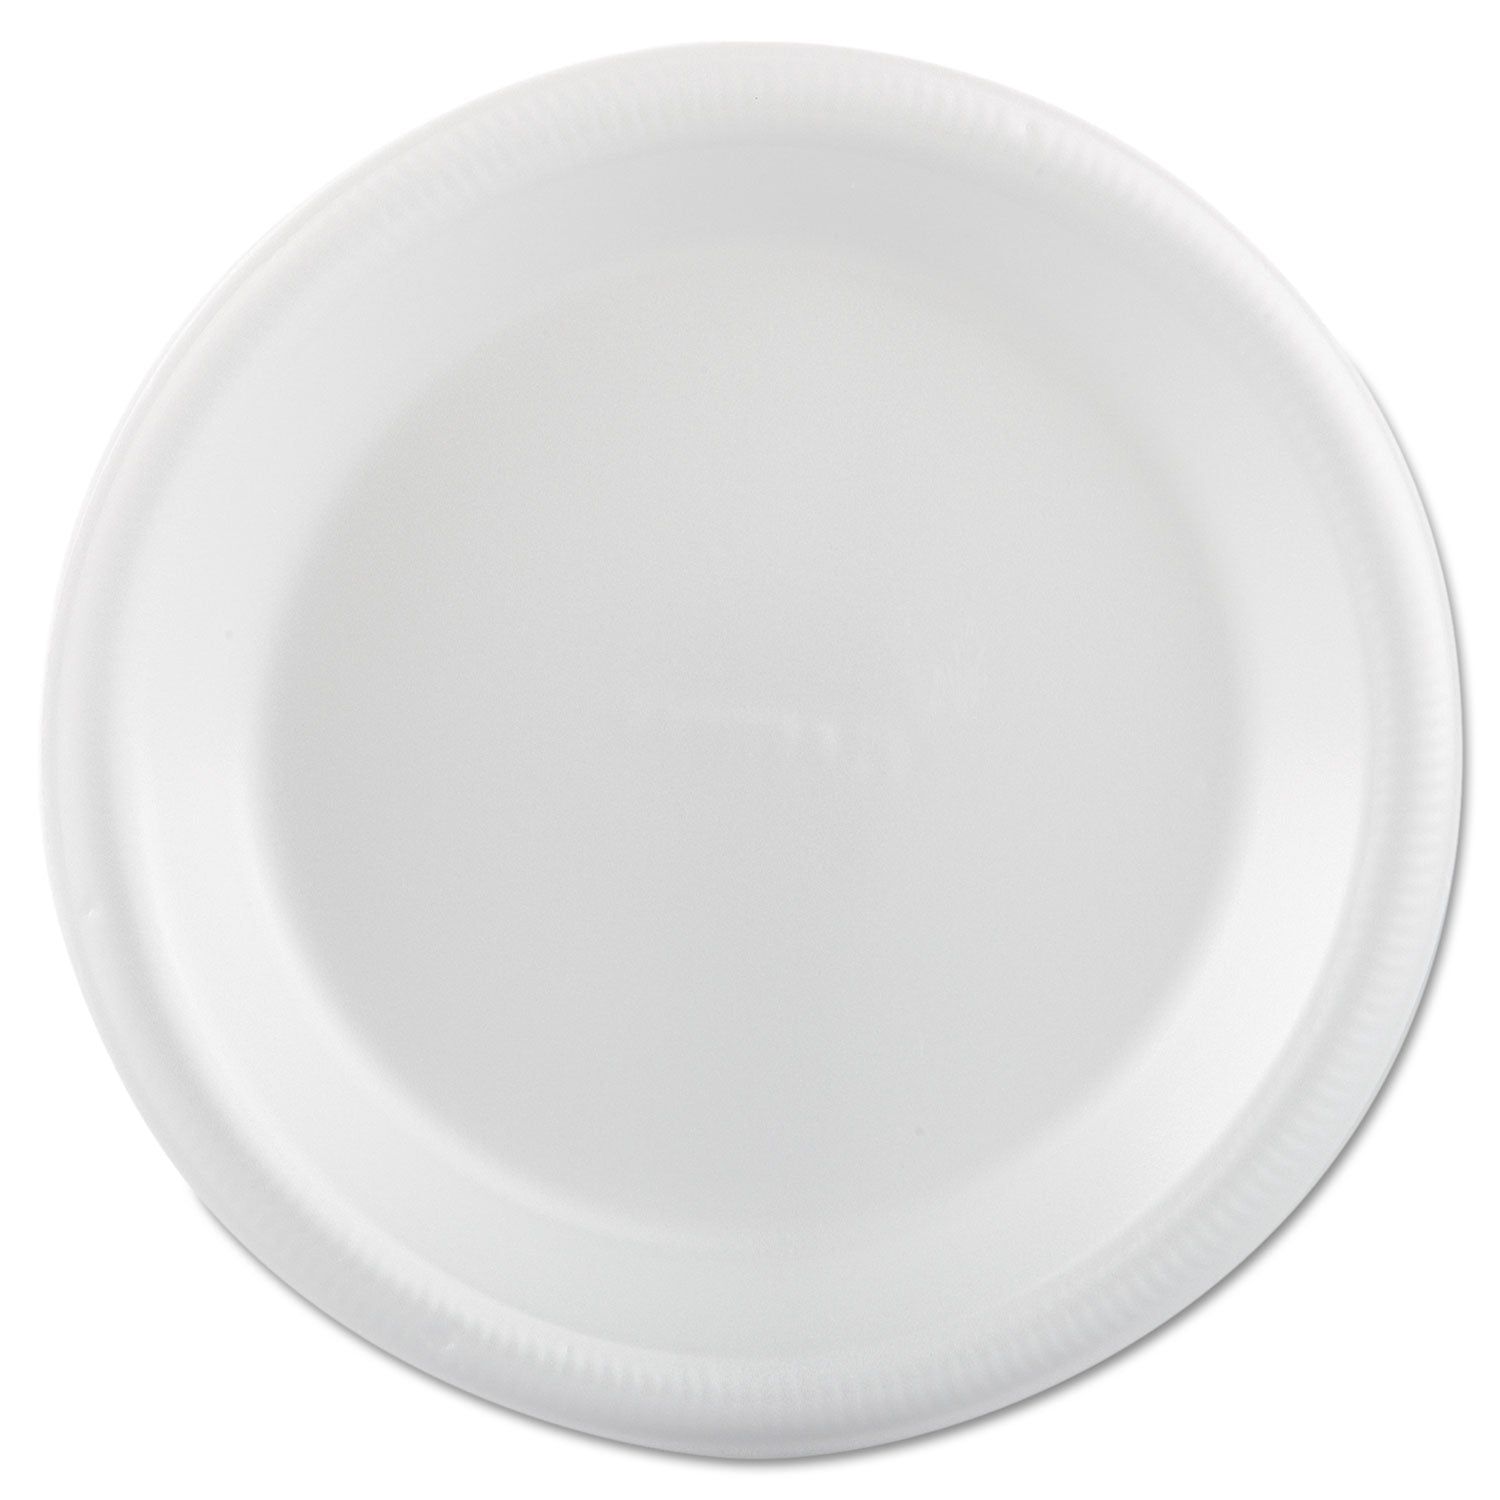 foam-dinnerware-plate-9-white-25-pack-20-packs-carton_pst12003 - 1